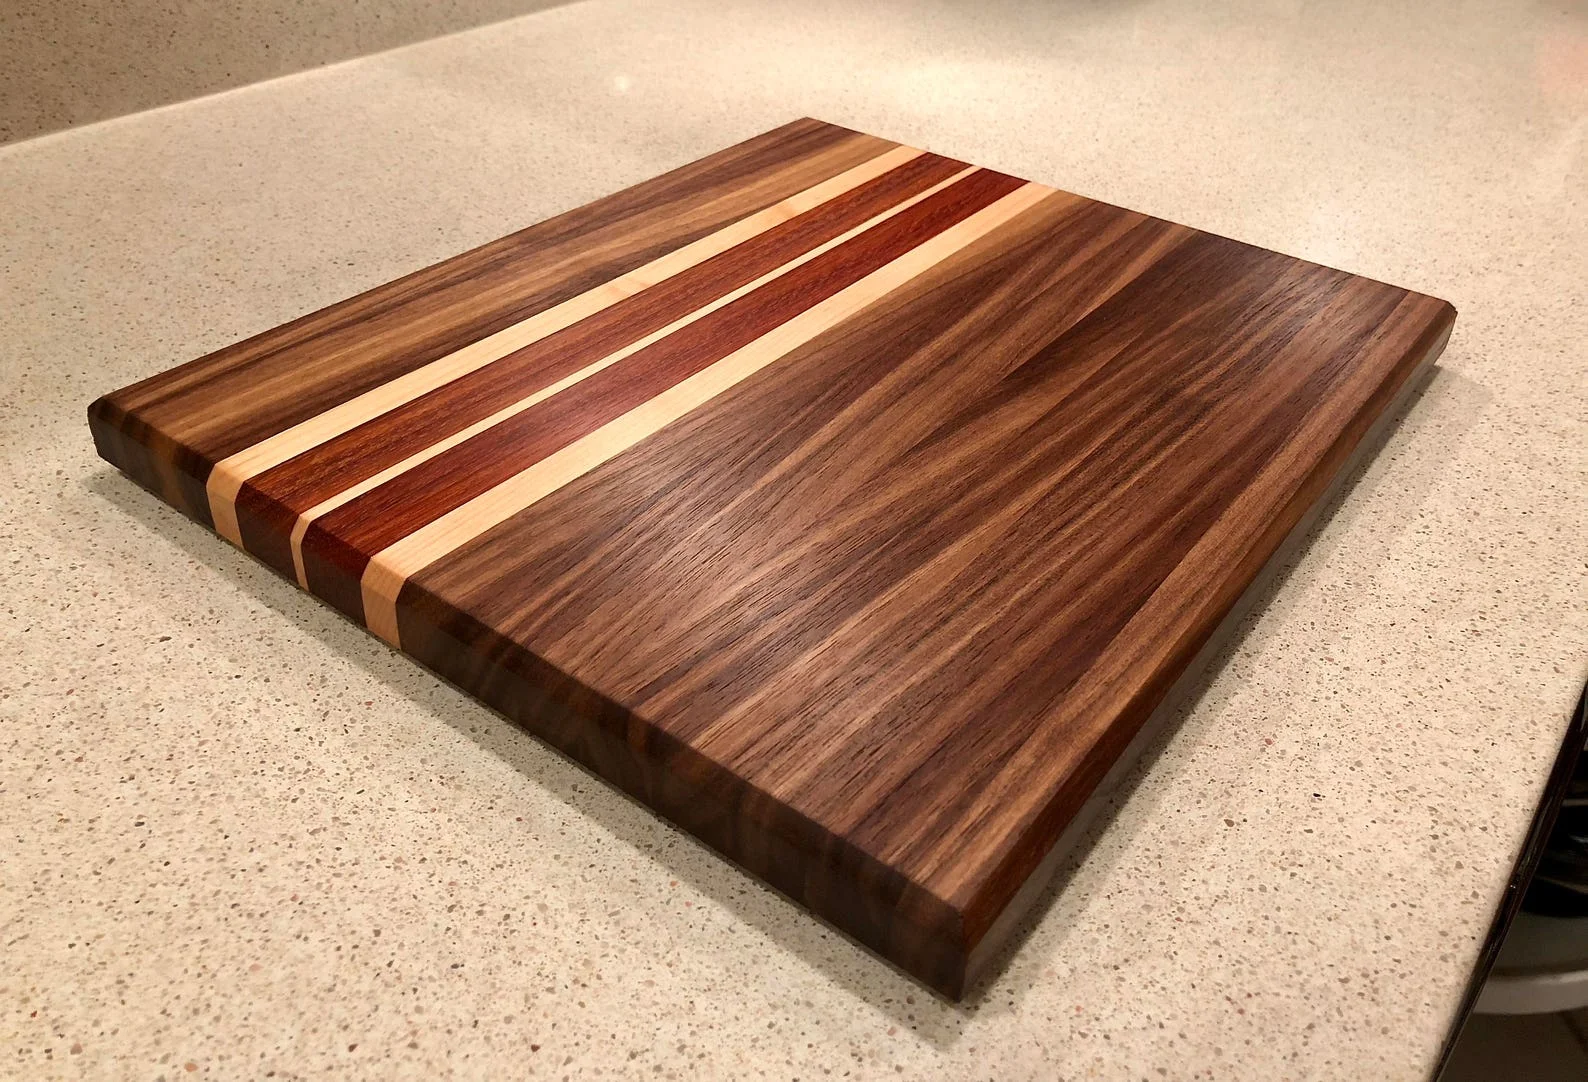 Handmade Wood Cutting Board: Black Walnut, Sugar Maple, and Jatoba